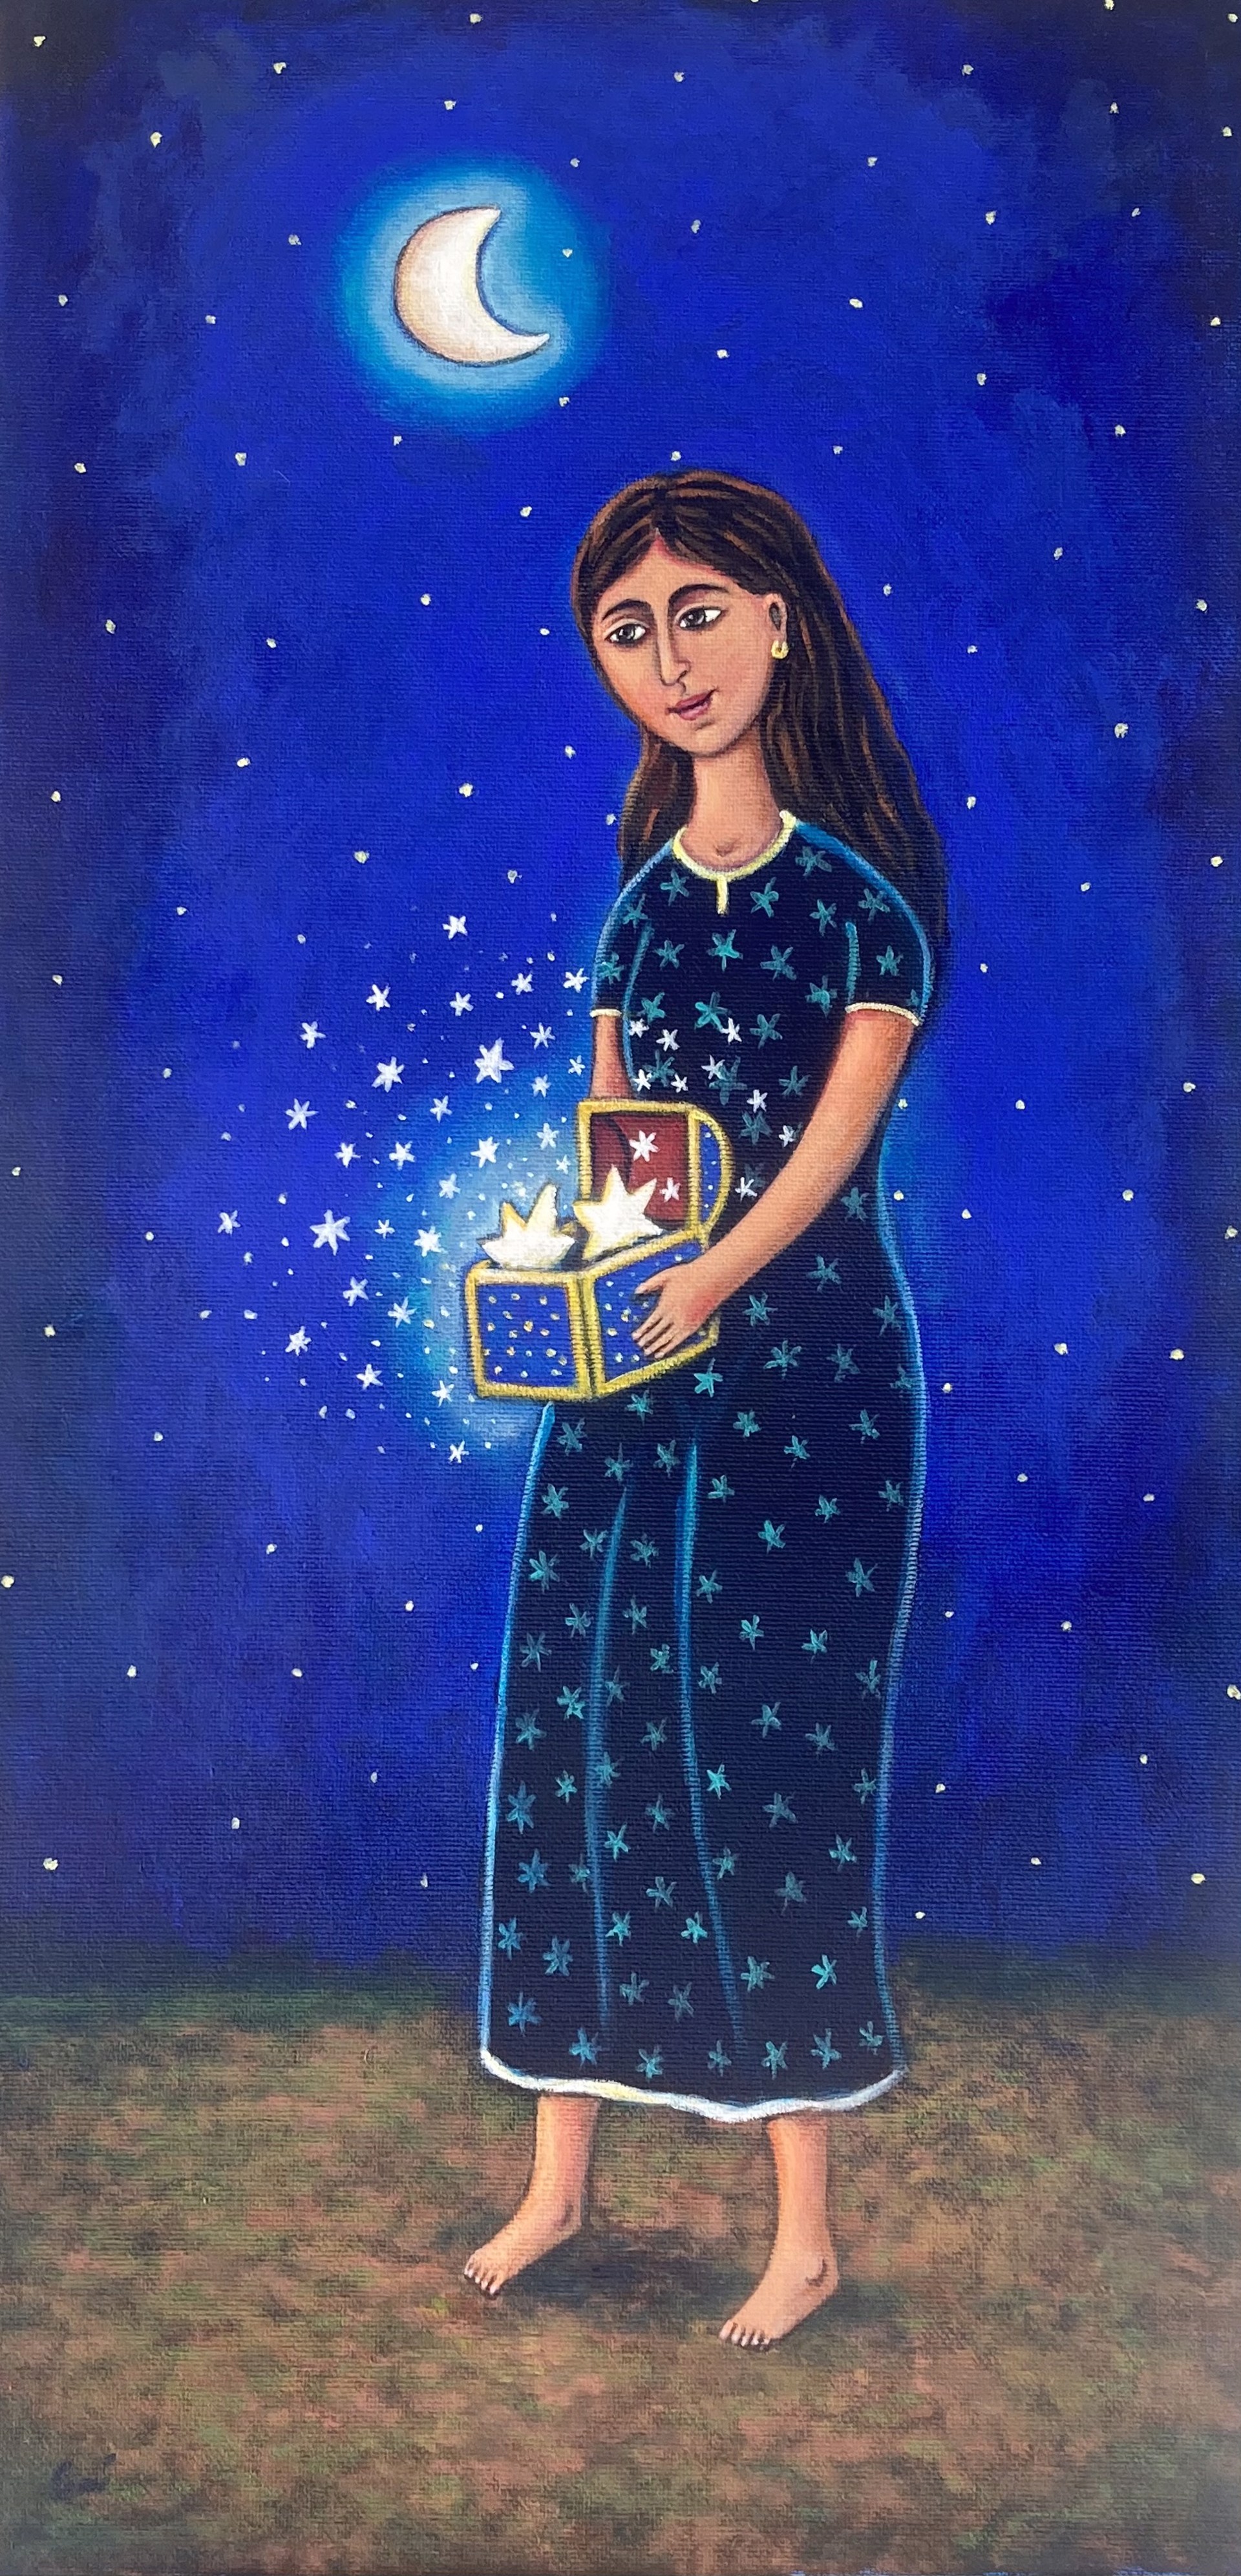 Starry Night by Esau Andrade